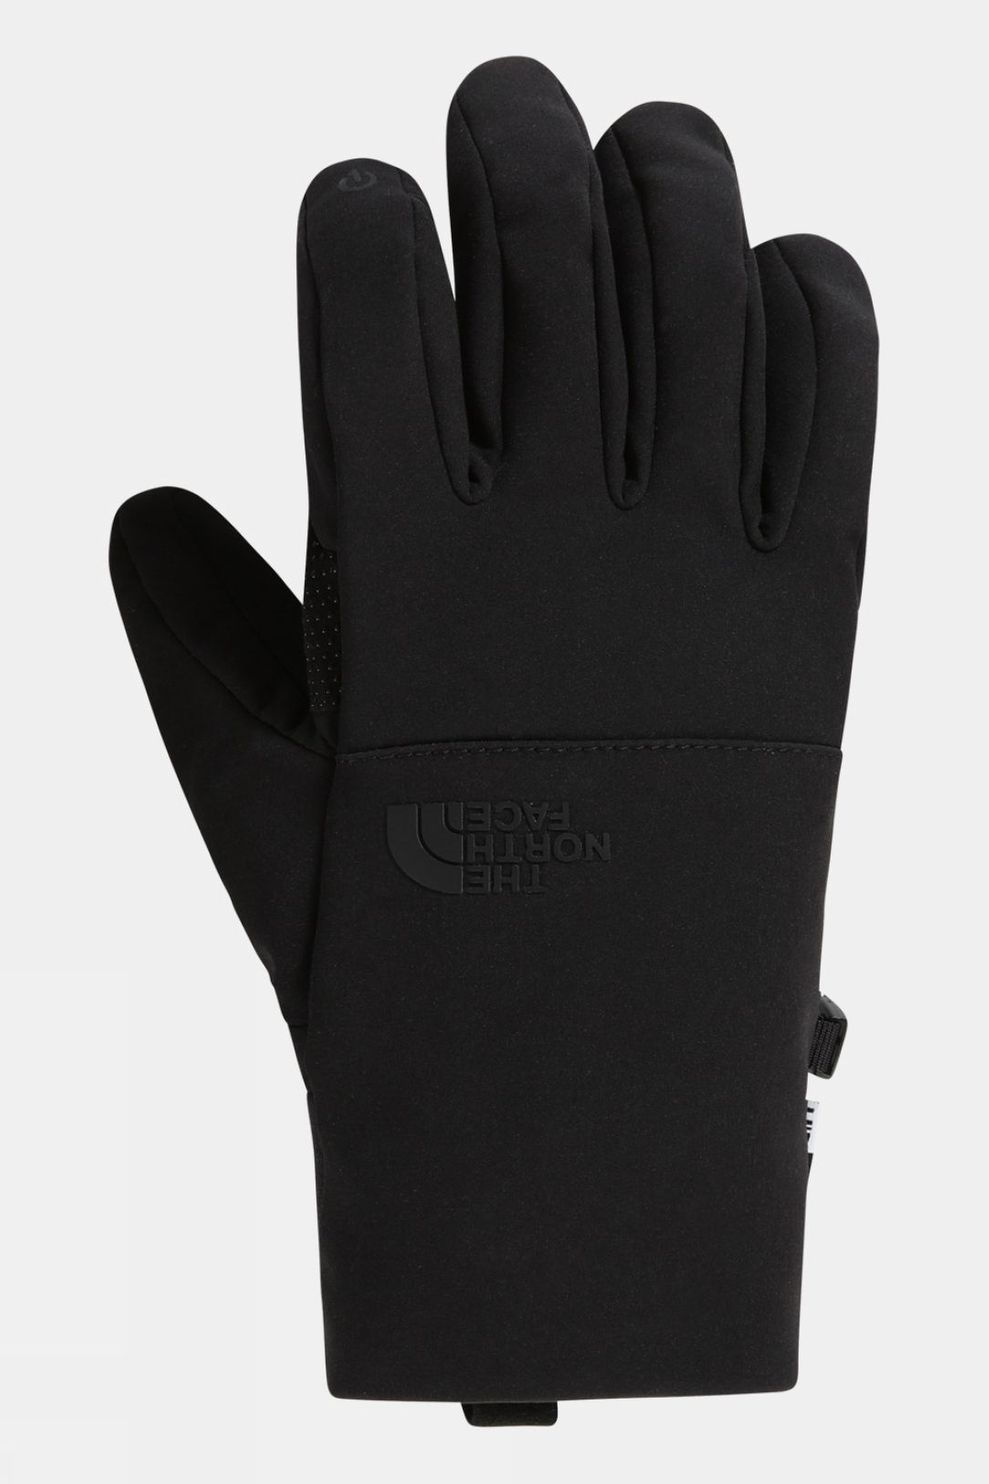 The North Face Mens Apex Etip Glove